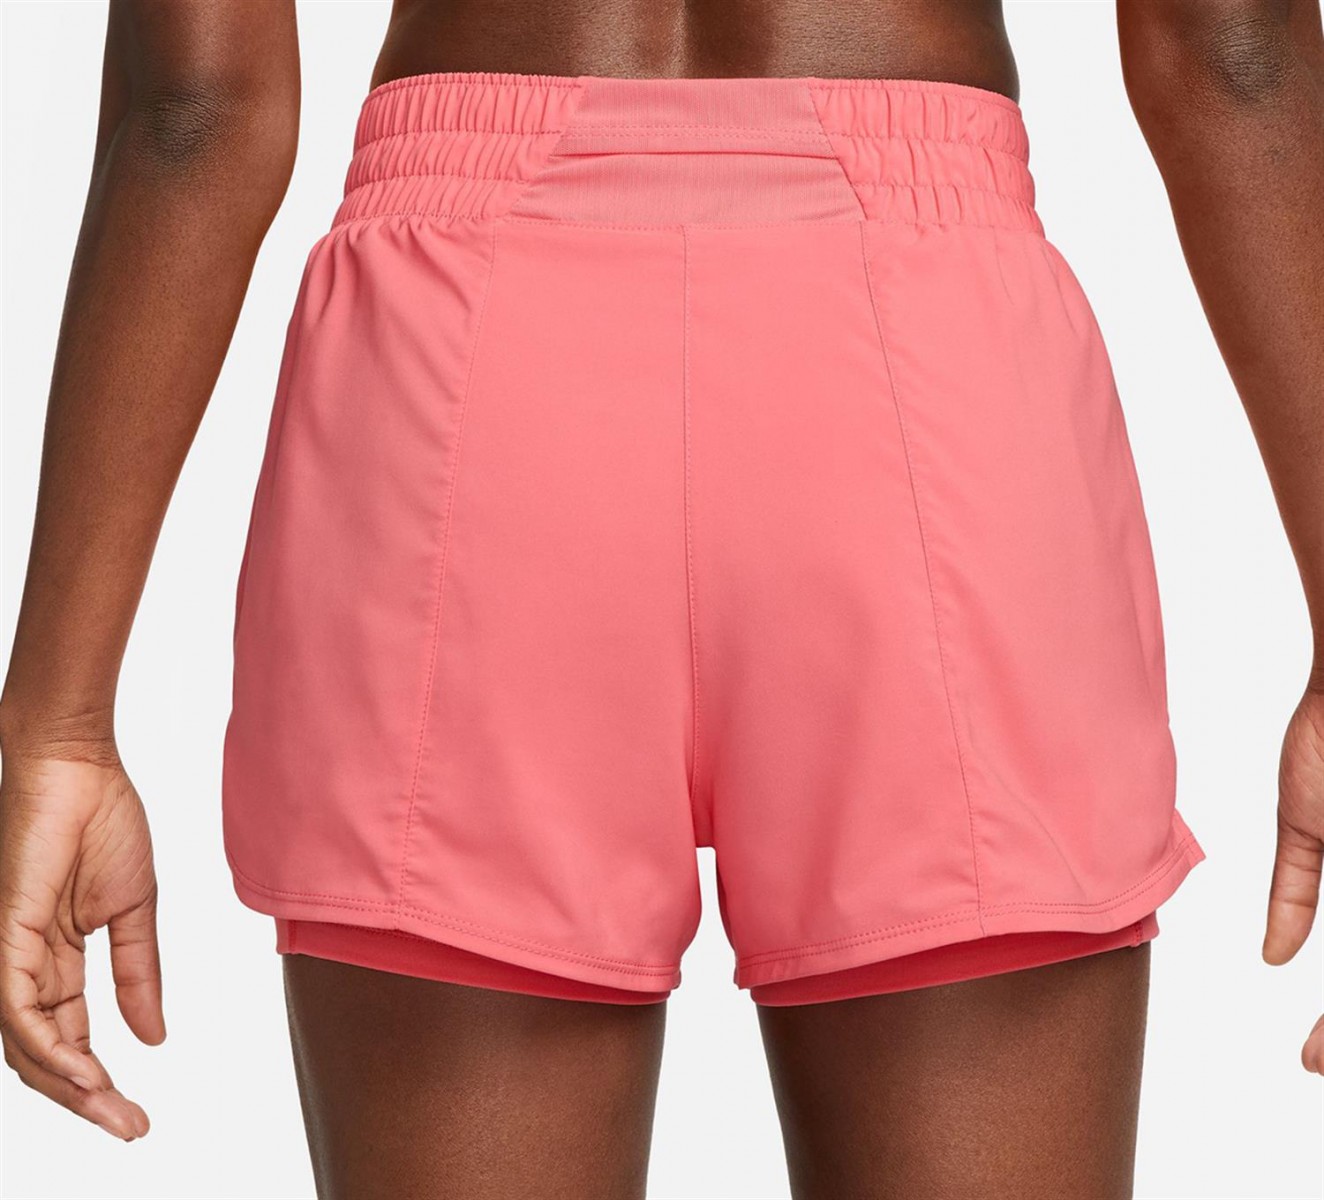 Теннисные шорты женские Nike One Shorts sea coral/silver